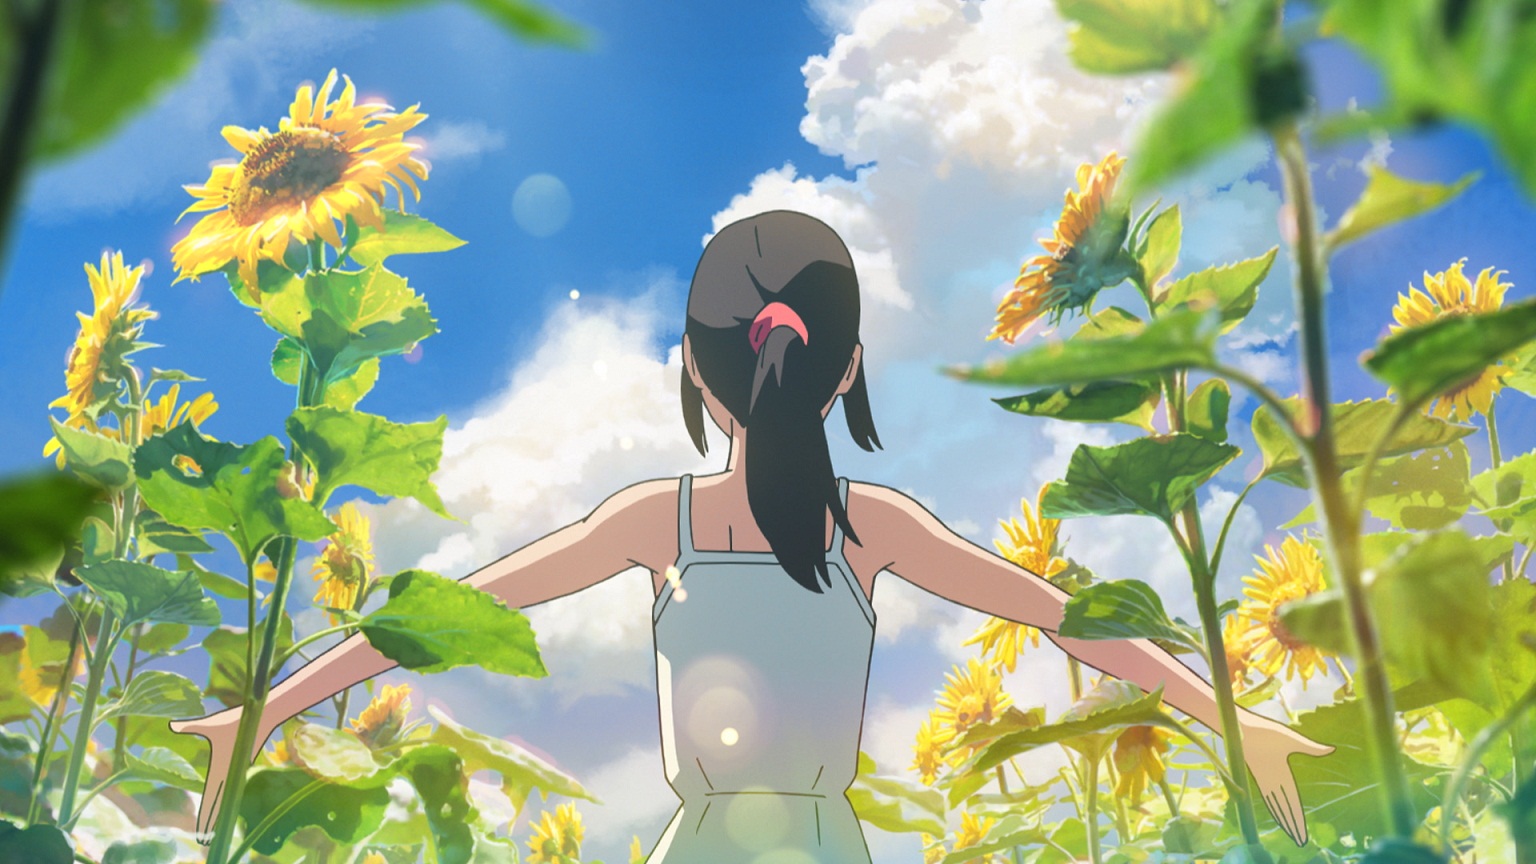 Sunflower - Other & Anime Background Wallpapers on Desktop Nexus (Image  2287582)